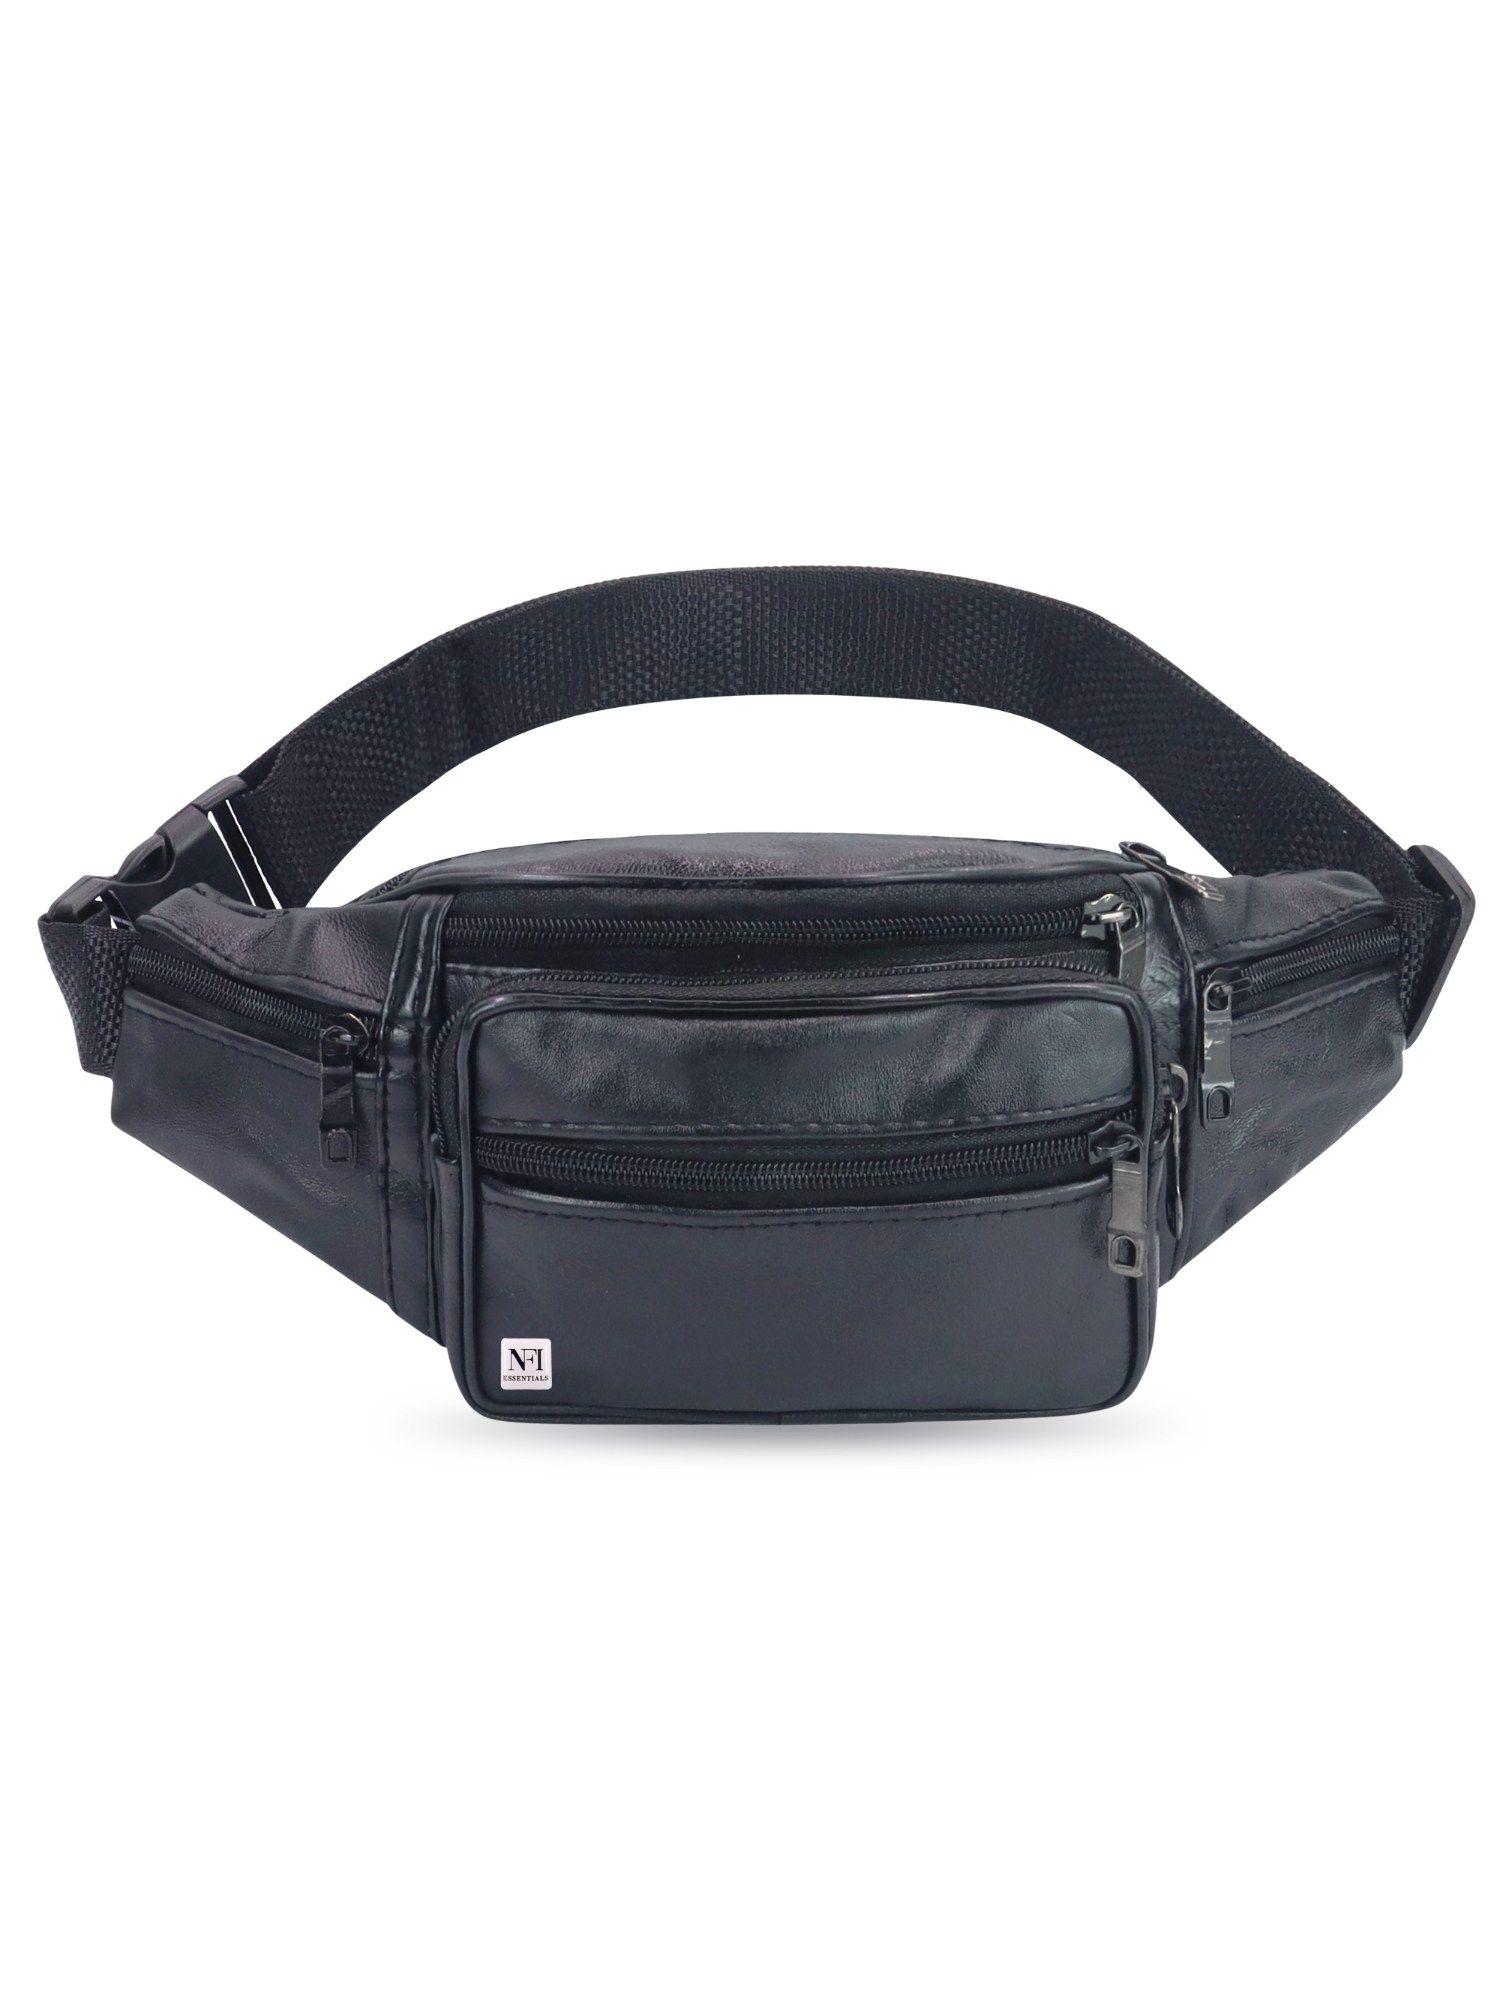 unisex pu leather waist bag travel handy hiking crossbody bag black